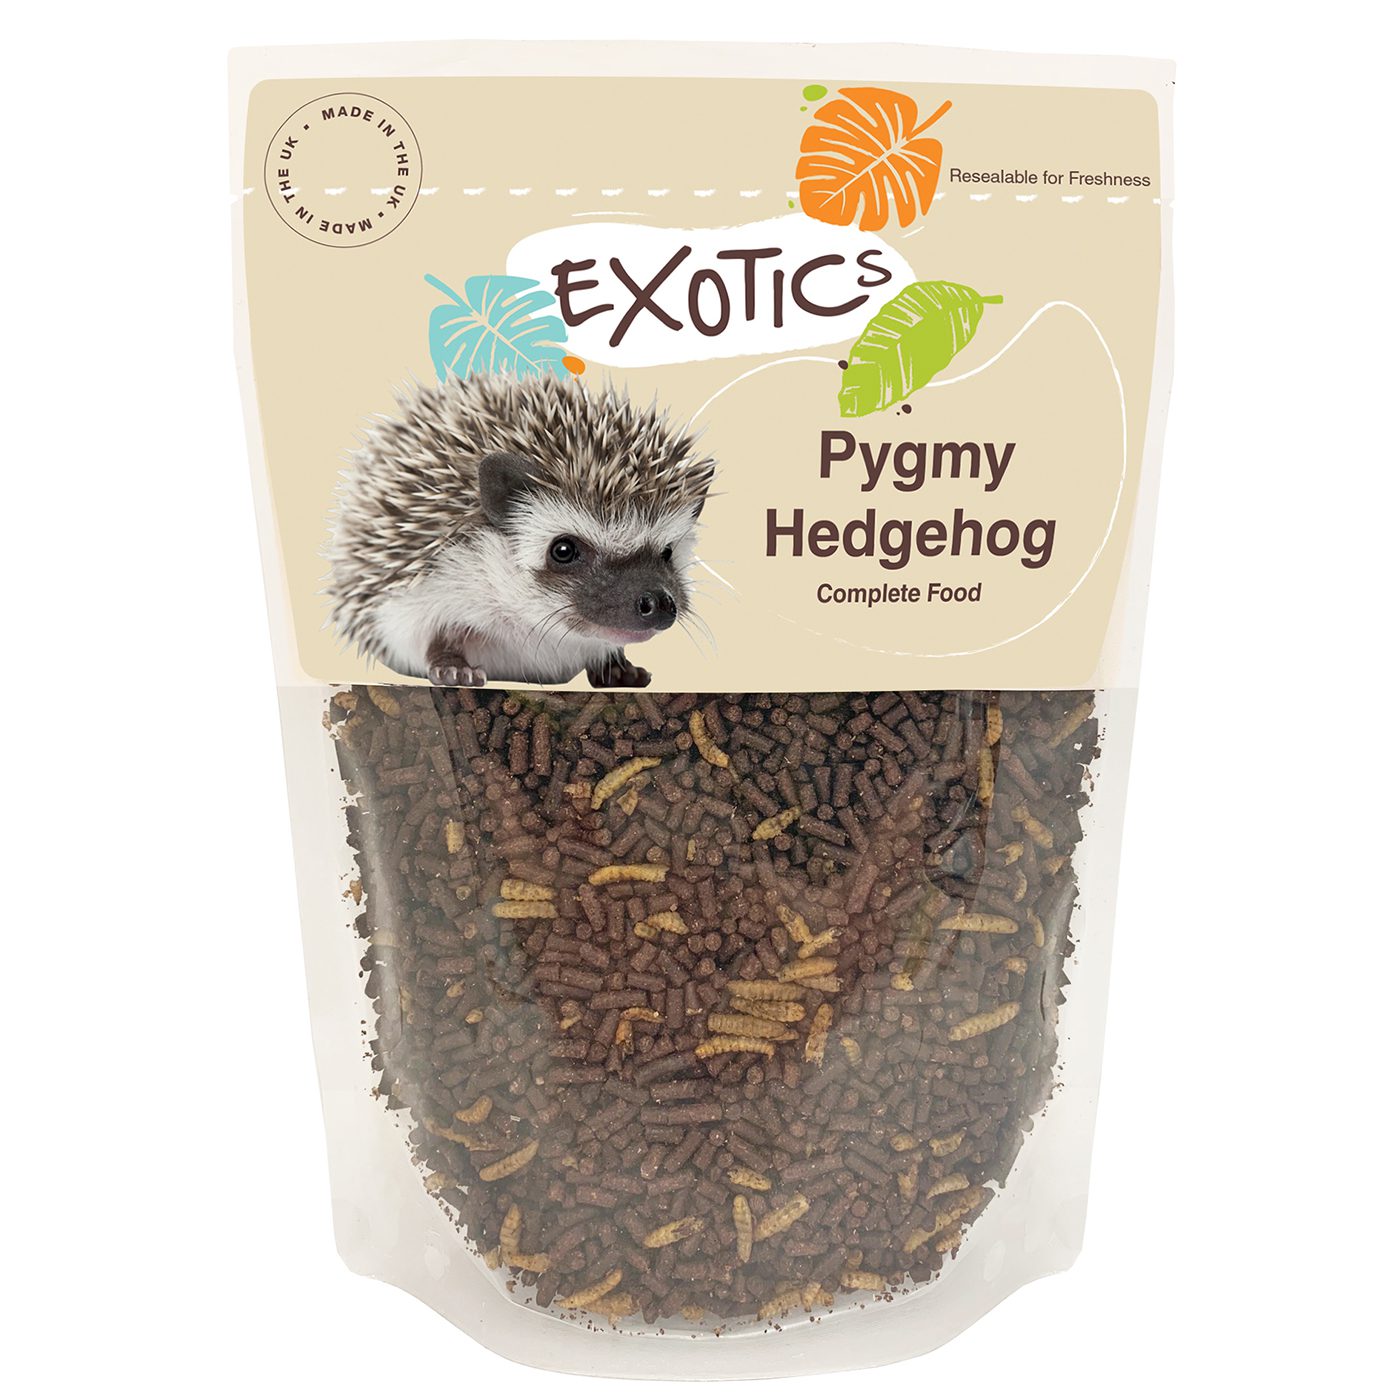 NG Exotics Pygmy Hedgehog Complete 600g